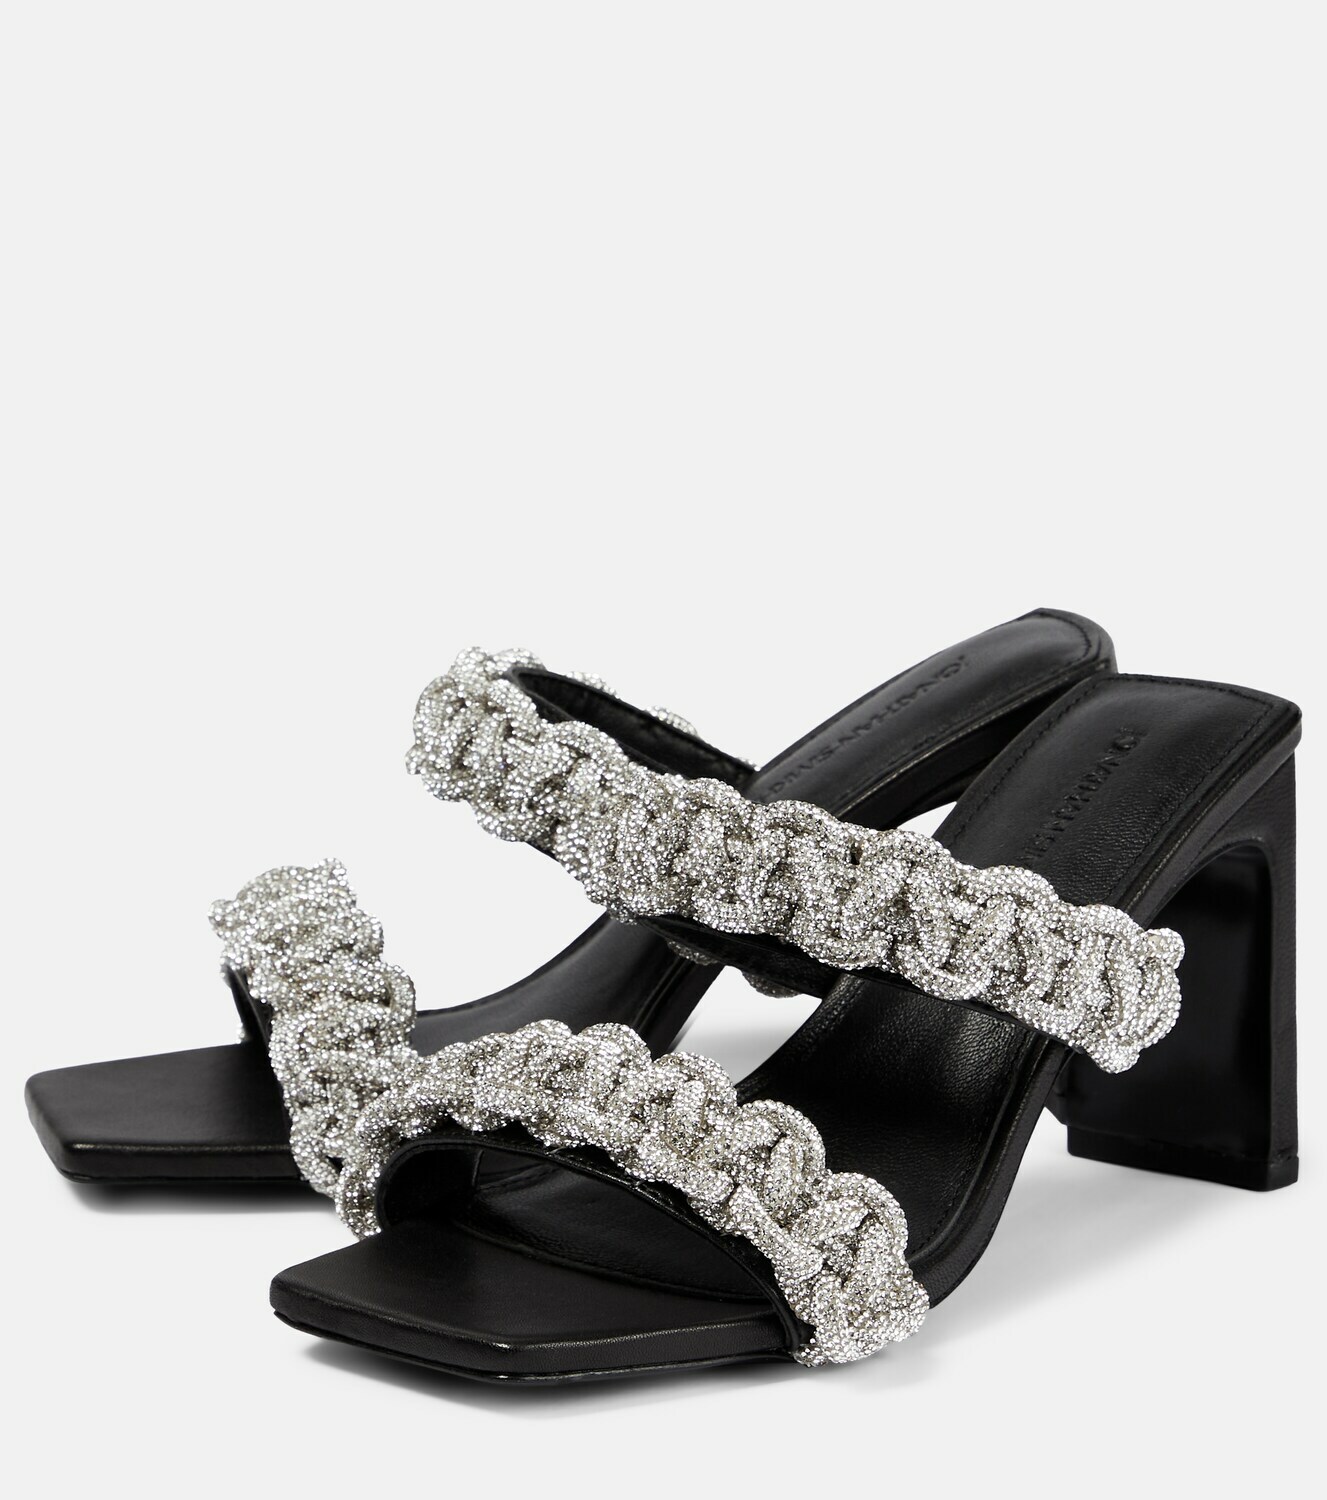 Simkhai - Walker crystal-embellished sandals Simkhai